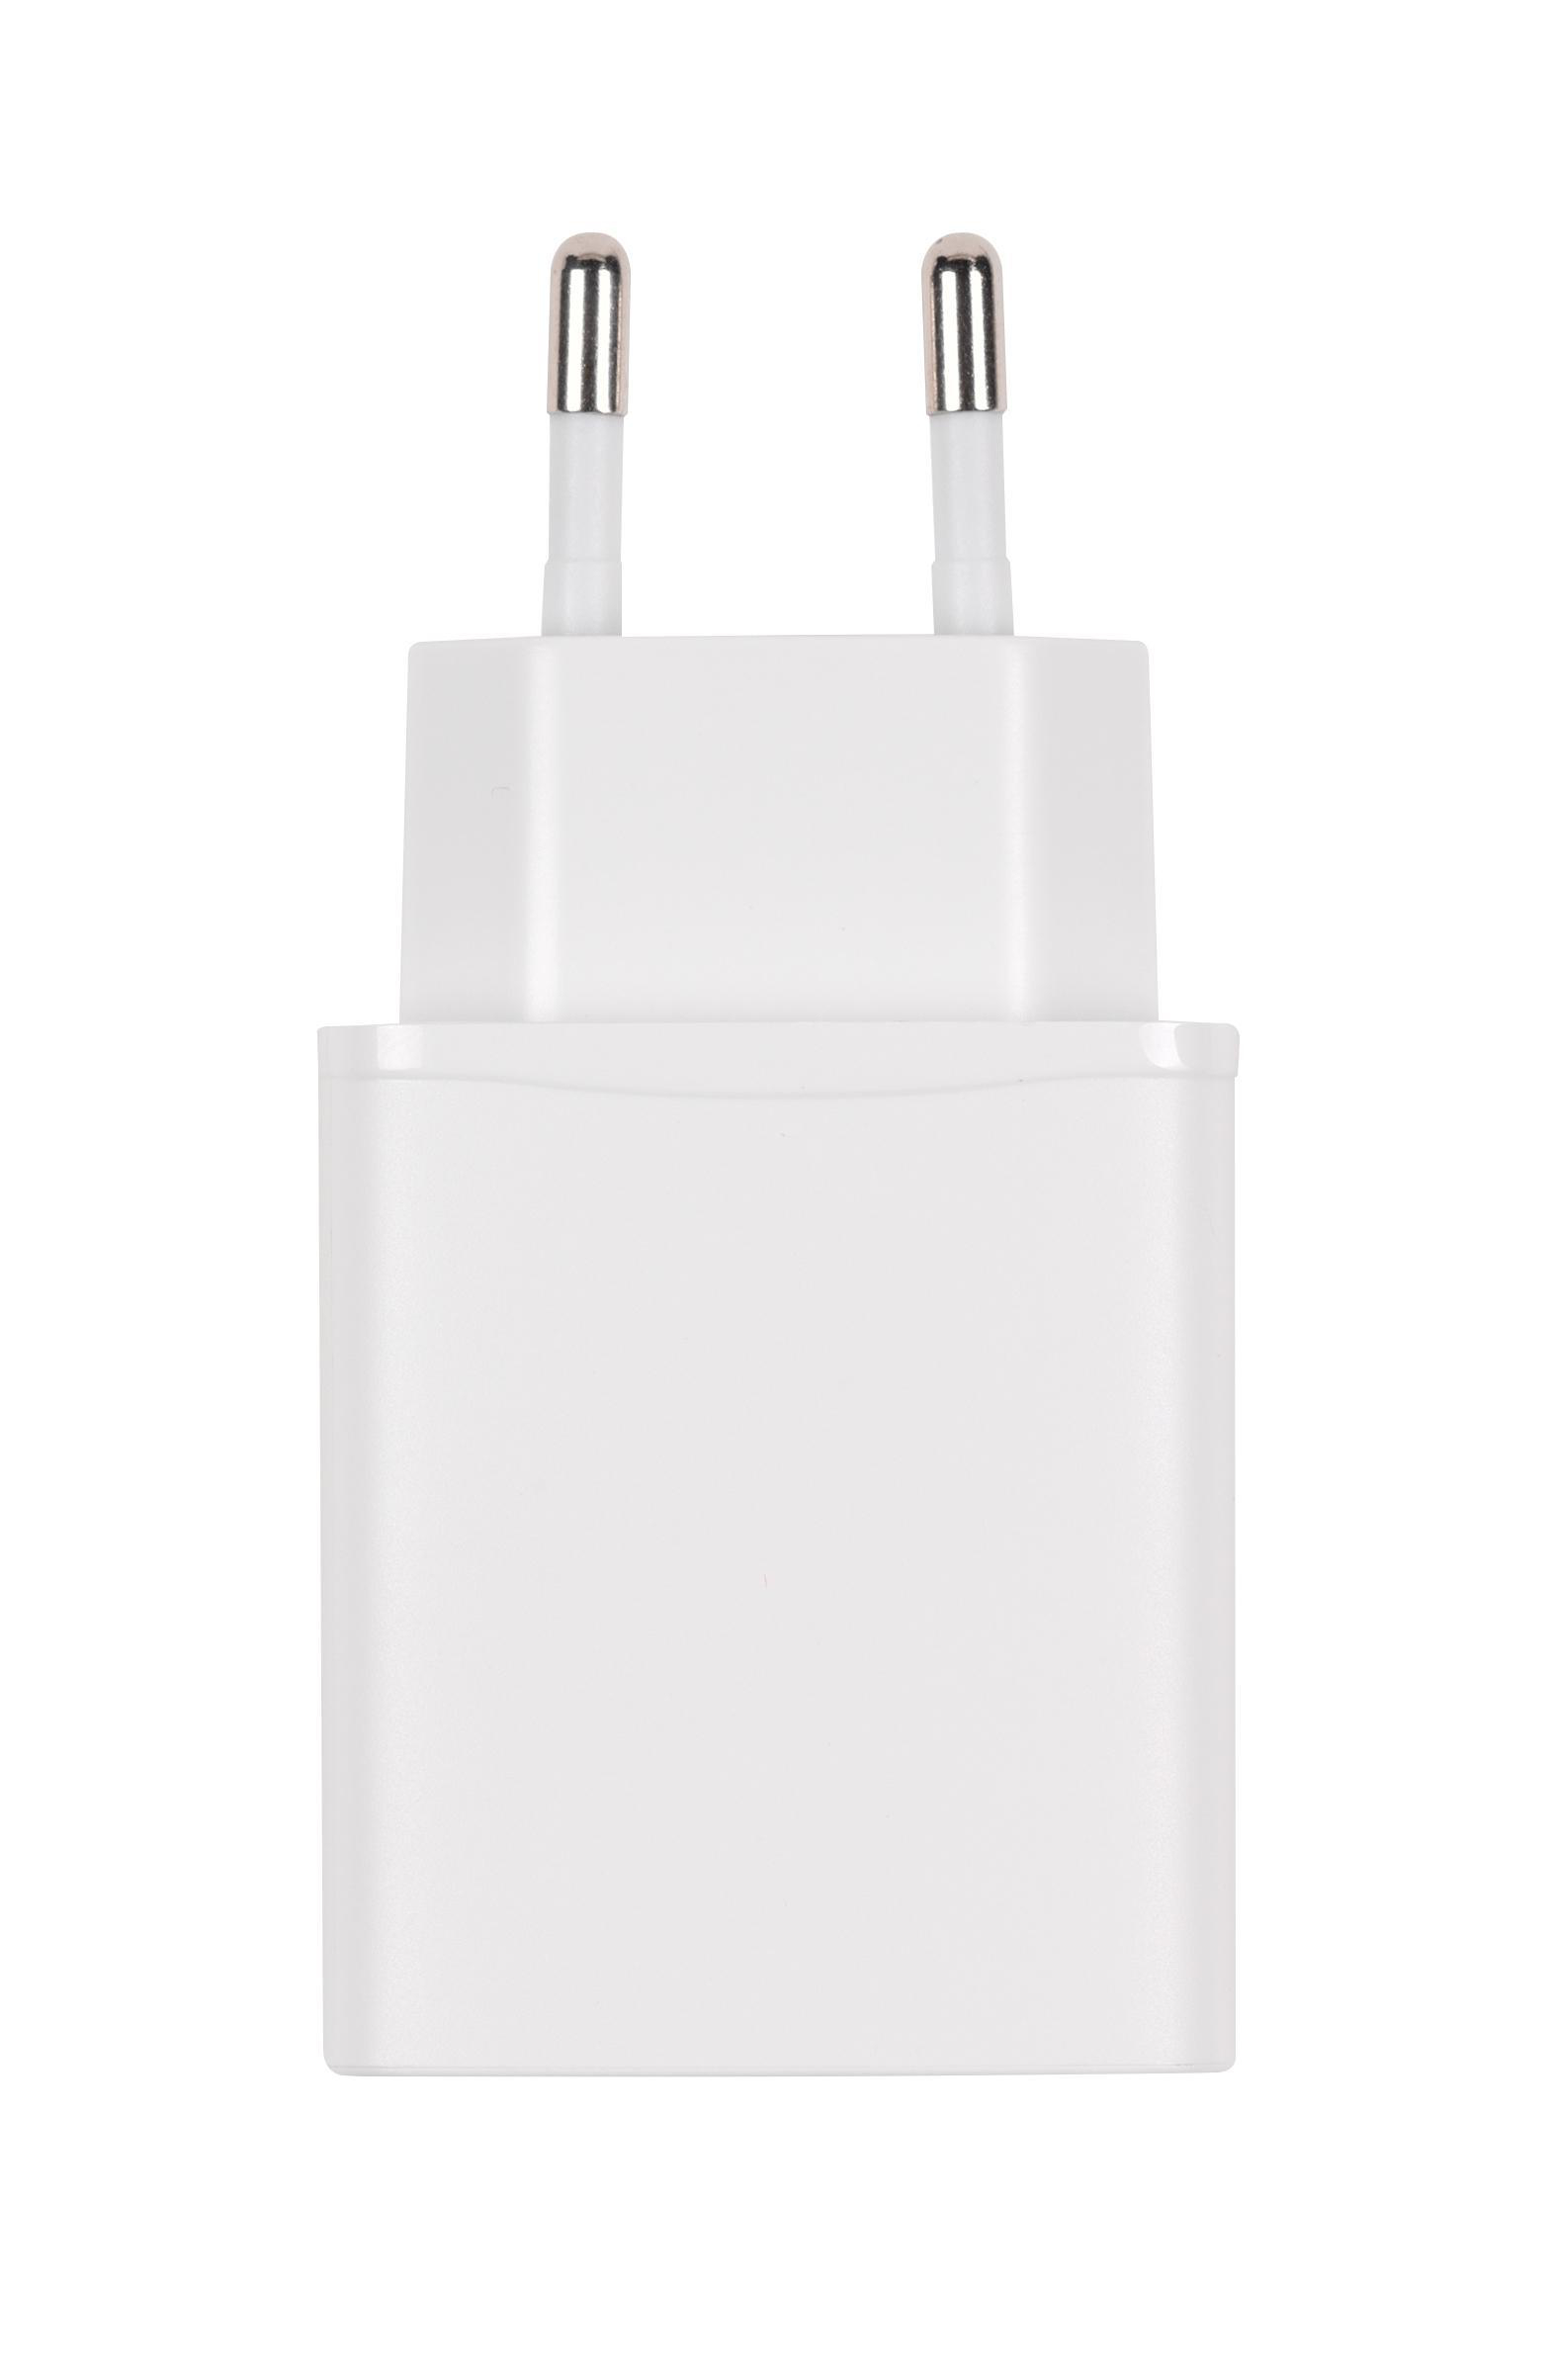 18 100 Weiß Fast 240 - Charger Volt universal, Super 3.0 Watt, Delivery VIVANCO Power Ladegerät